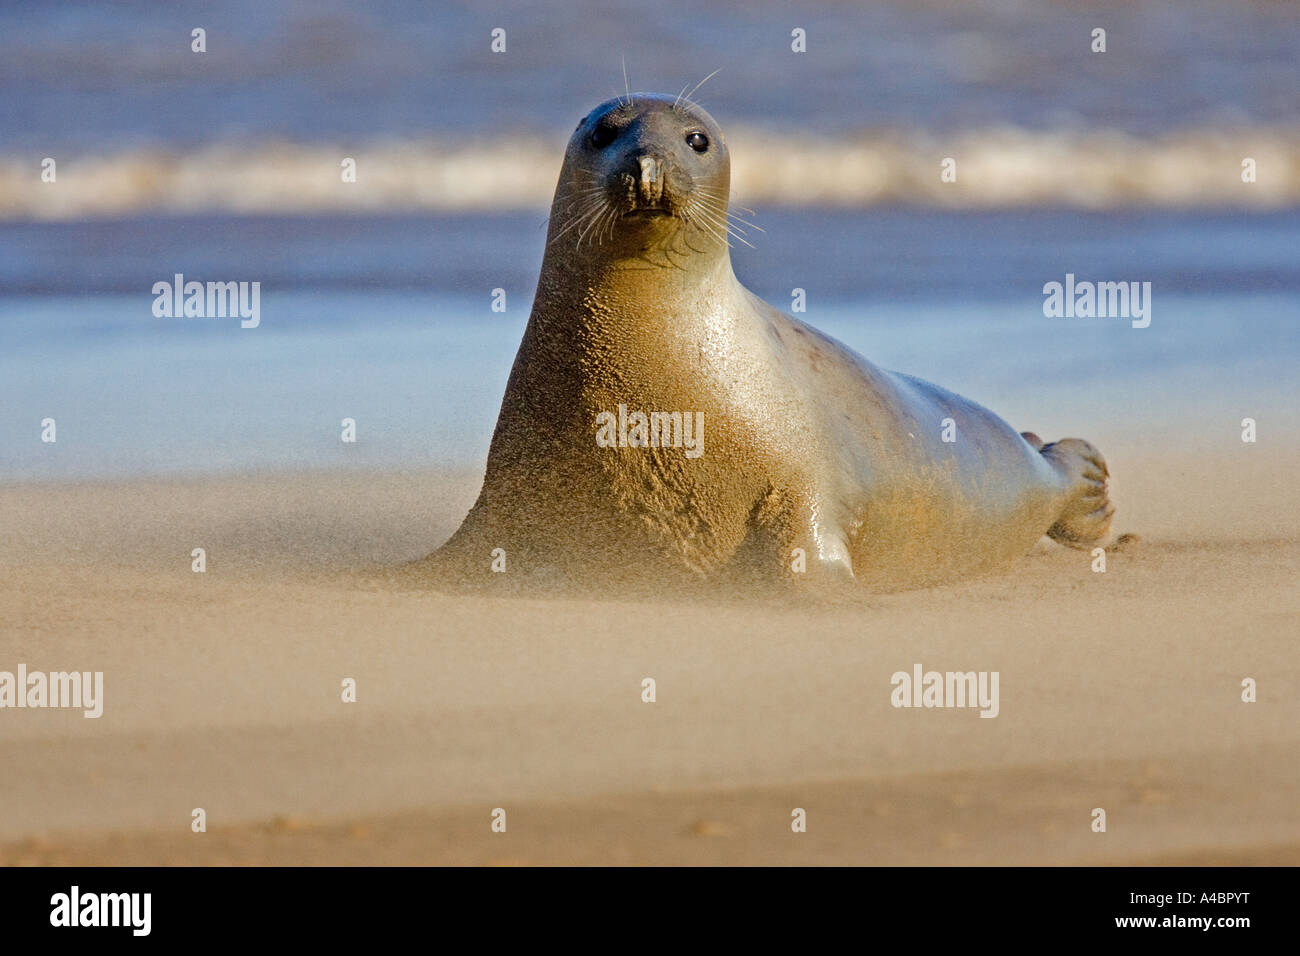 Atlantic seal in sandstorm, Donna Nook Stock Photo